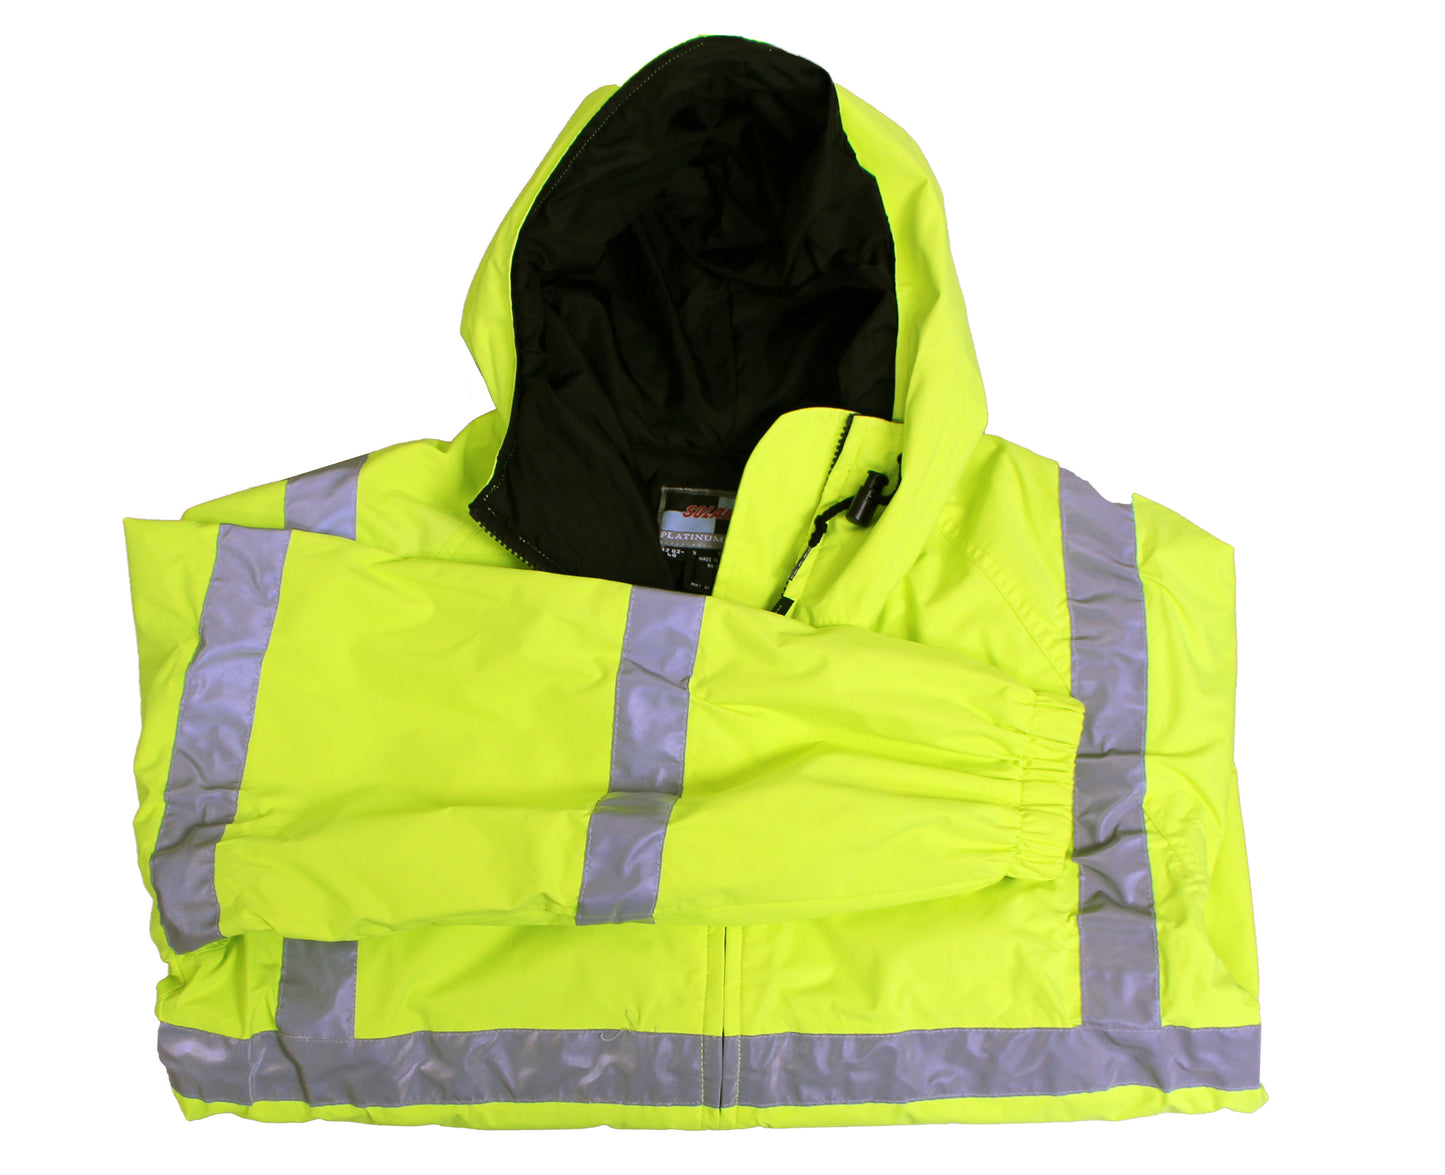 Solar 1 Clothing Reflective Rain Jacket with Hood RJ02